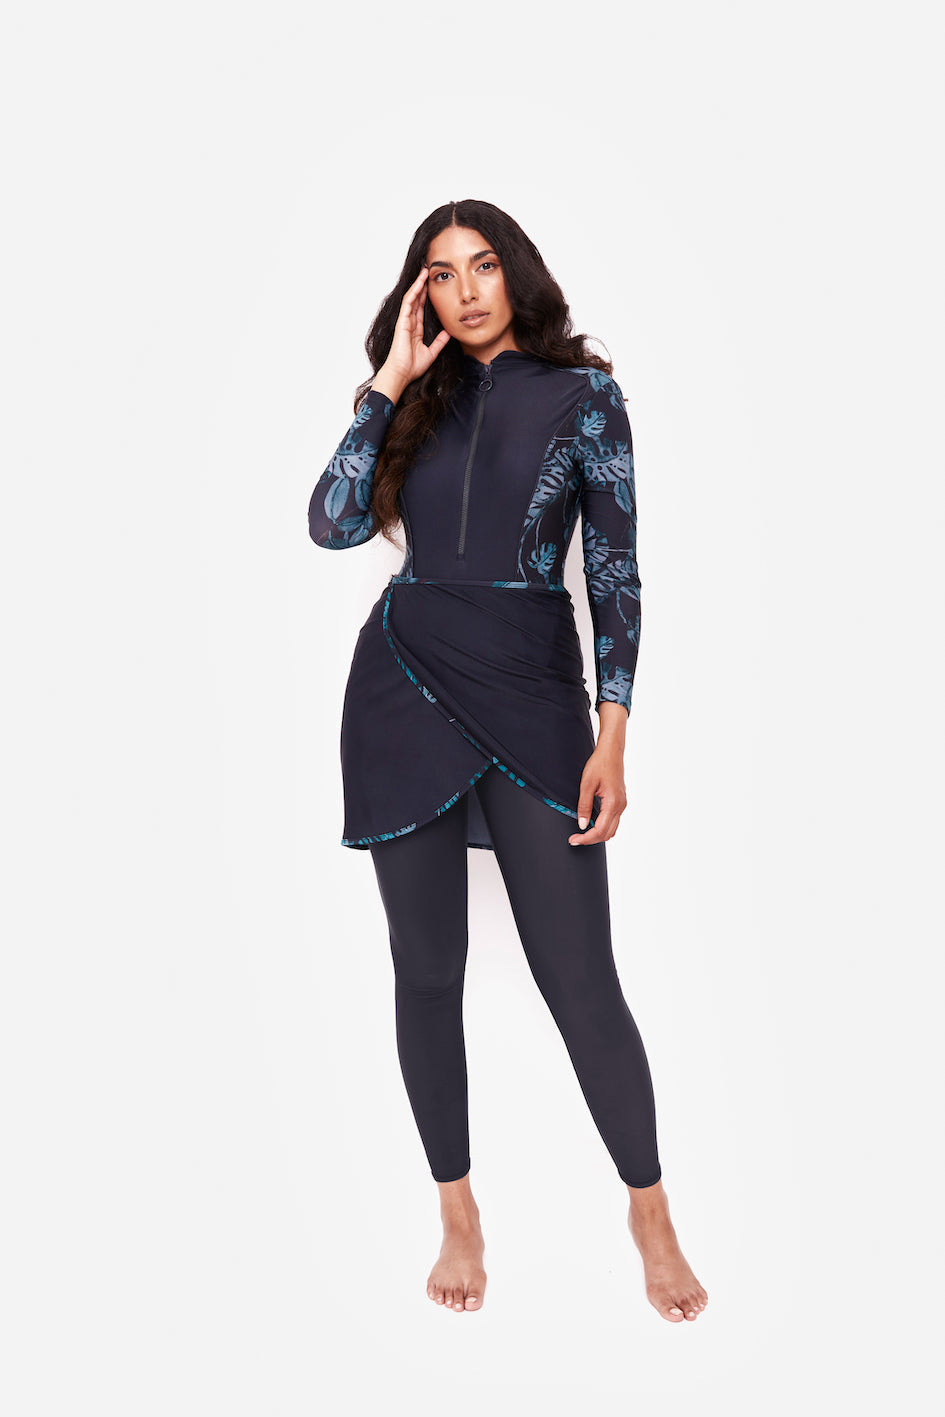 SOFIA - LUNAR // Buy Modest Swimming Suits For Muslim Women - LYRA Swimwear